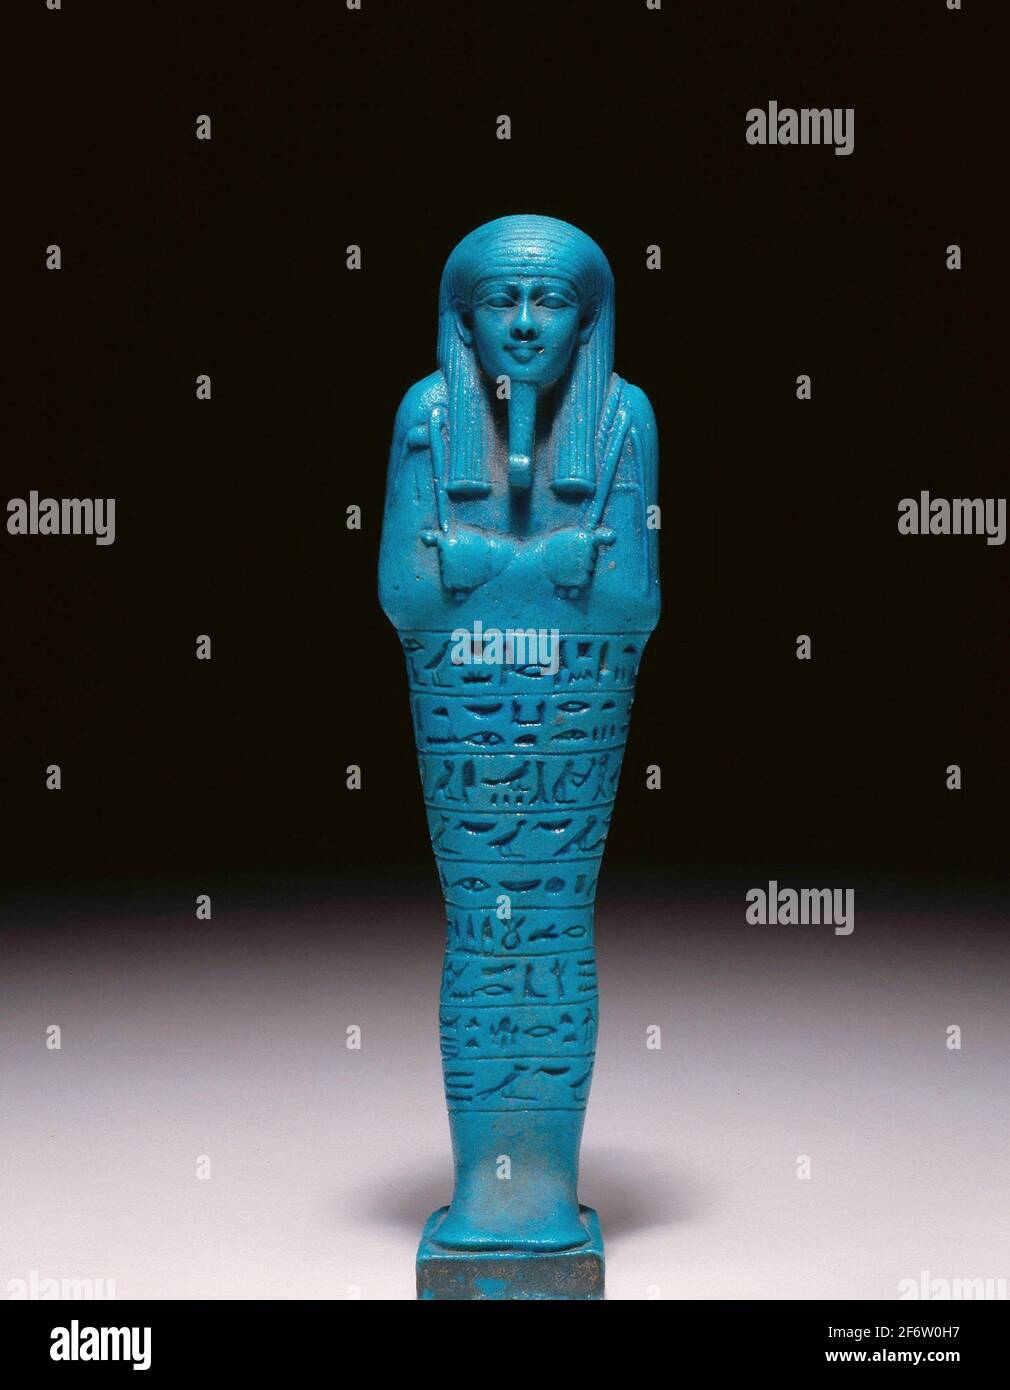 Author: Ancient Egyptian. Ushabti (Funerary Figurine) of Psamtek - Late Period, Dynasty 26, reign of Amasis (570'526 BC) - Egyptian. Faience. 570 Stock Photo